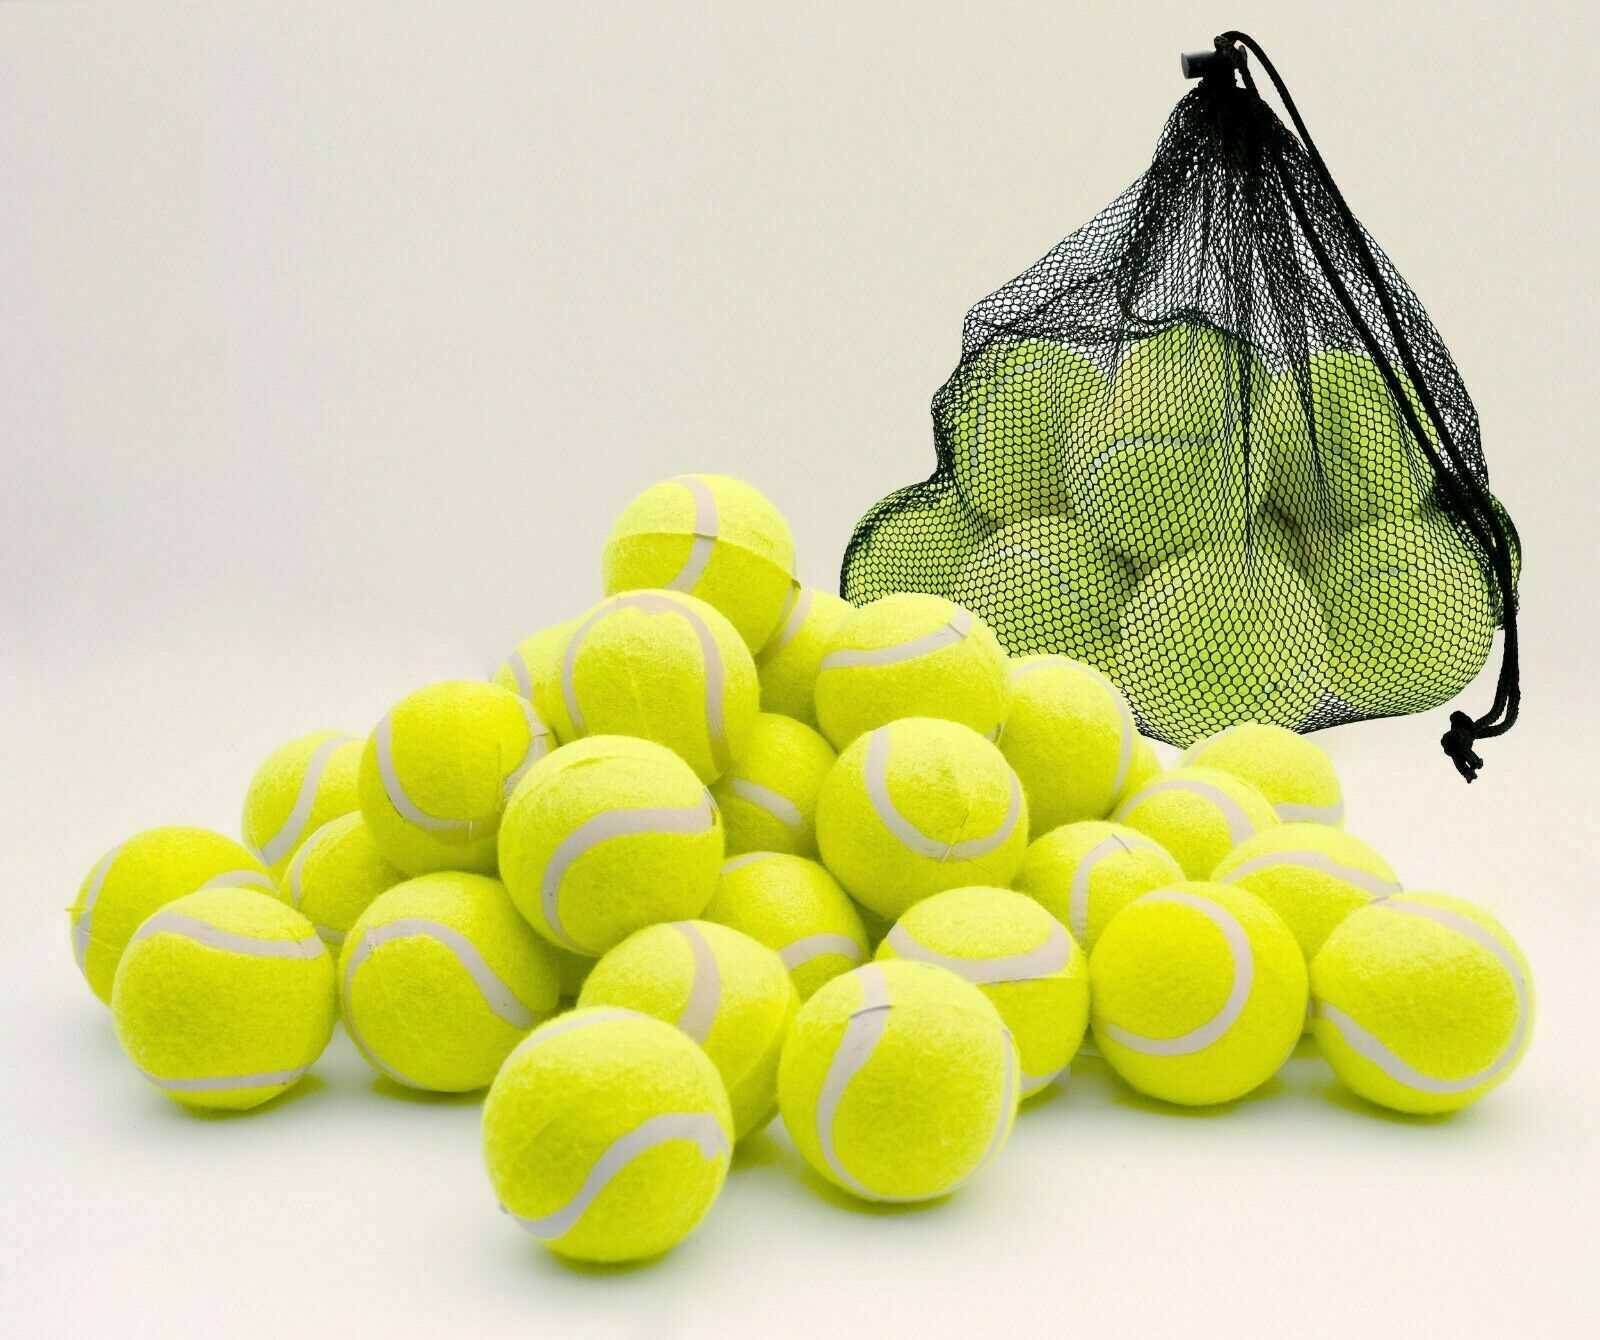 24 Pcs New Tennis Balls Yellow Ball Games Dog Pet Toy Pets Sports Games Fun